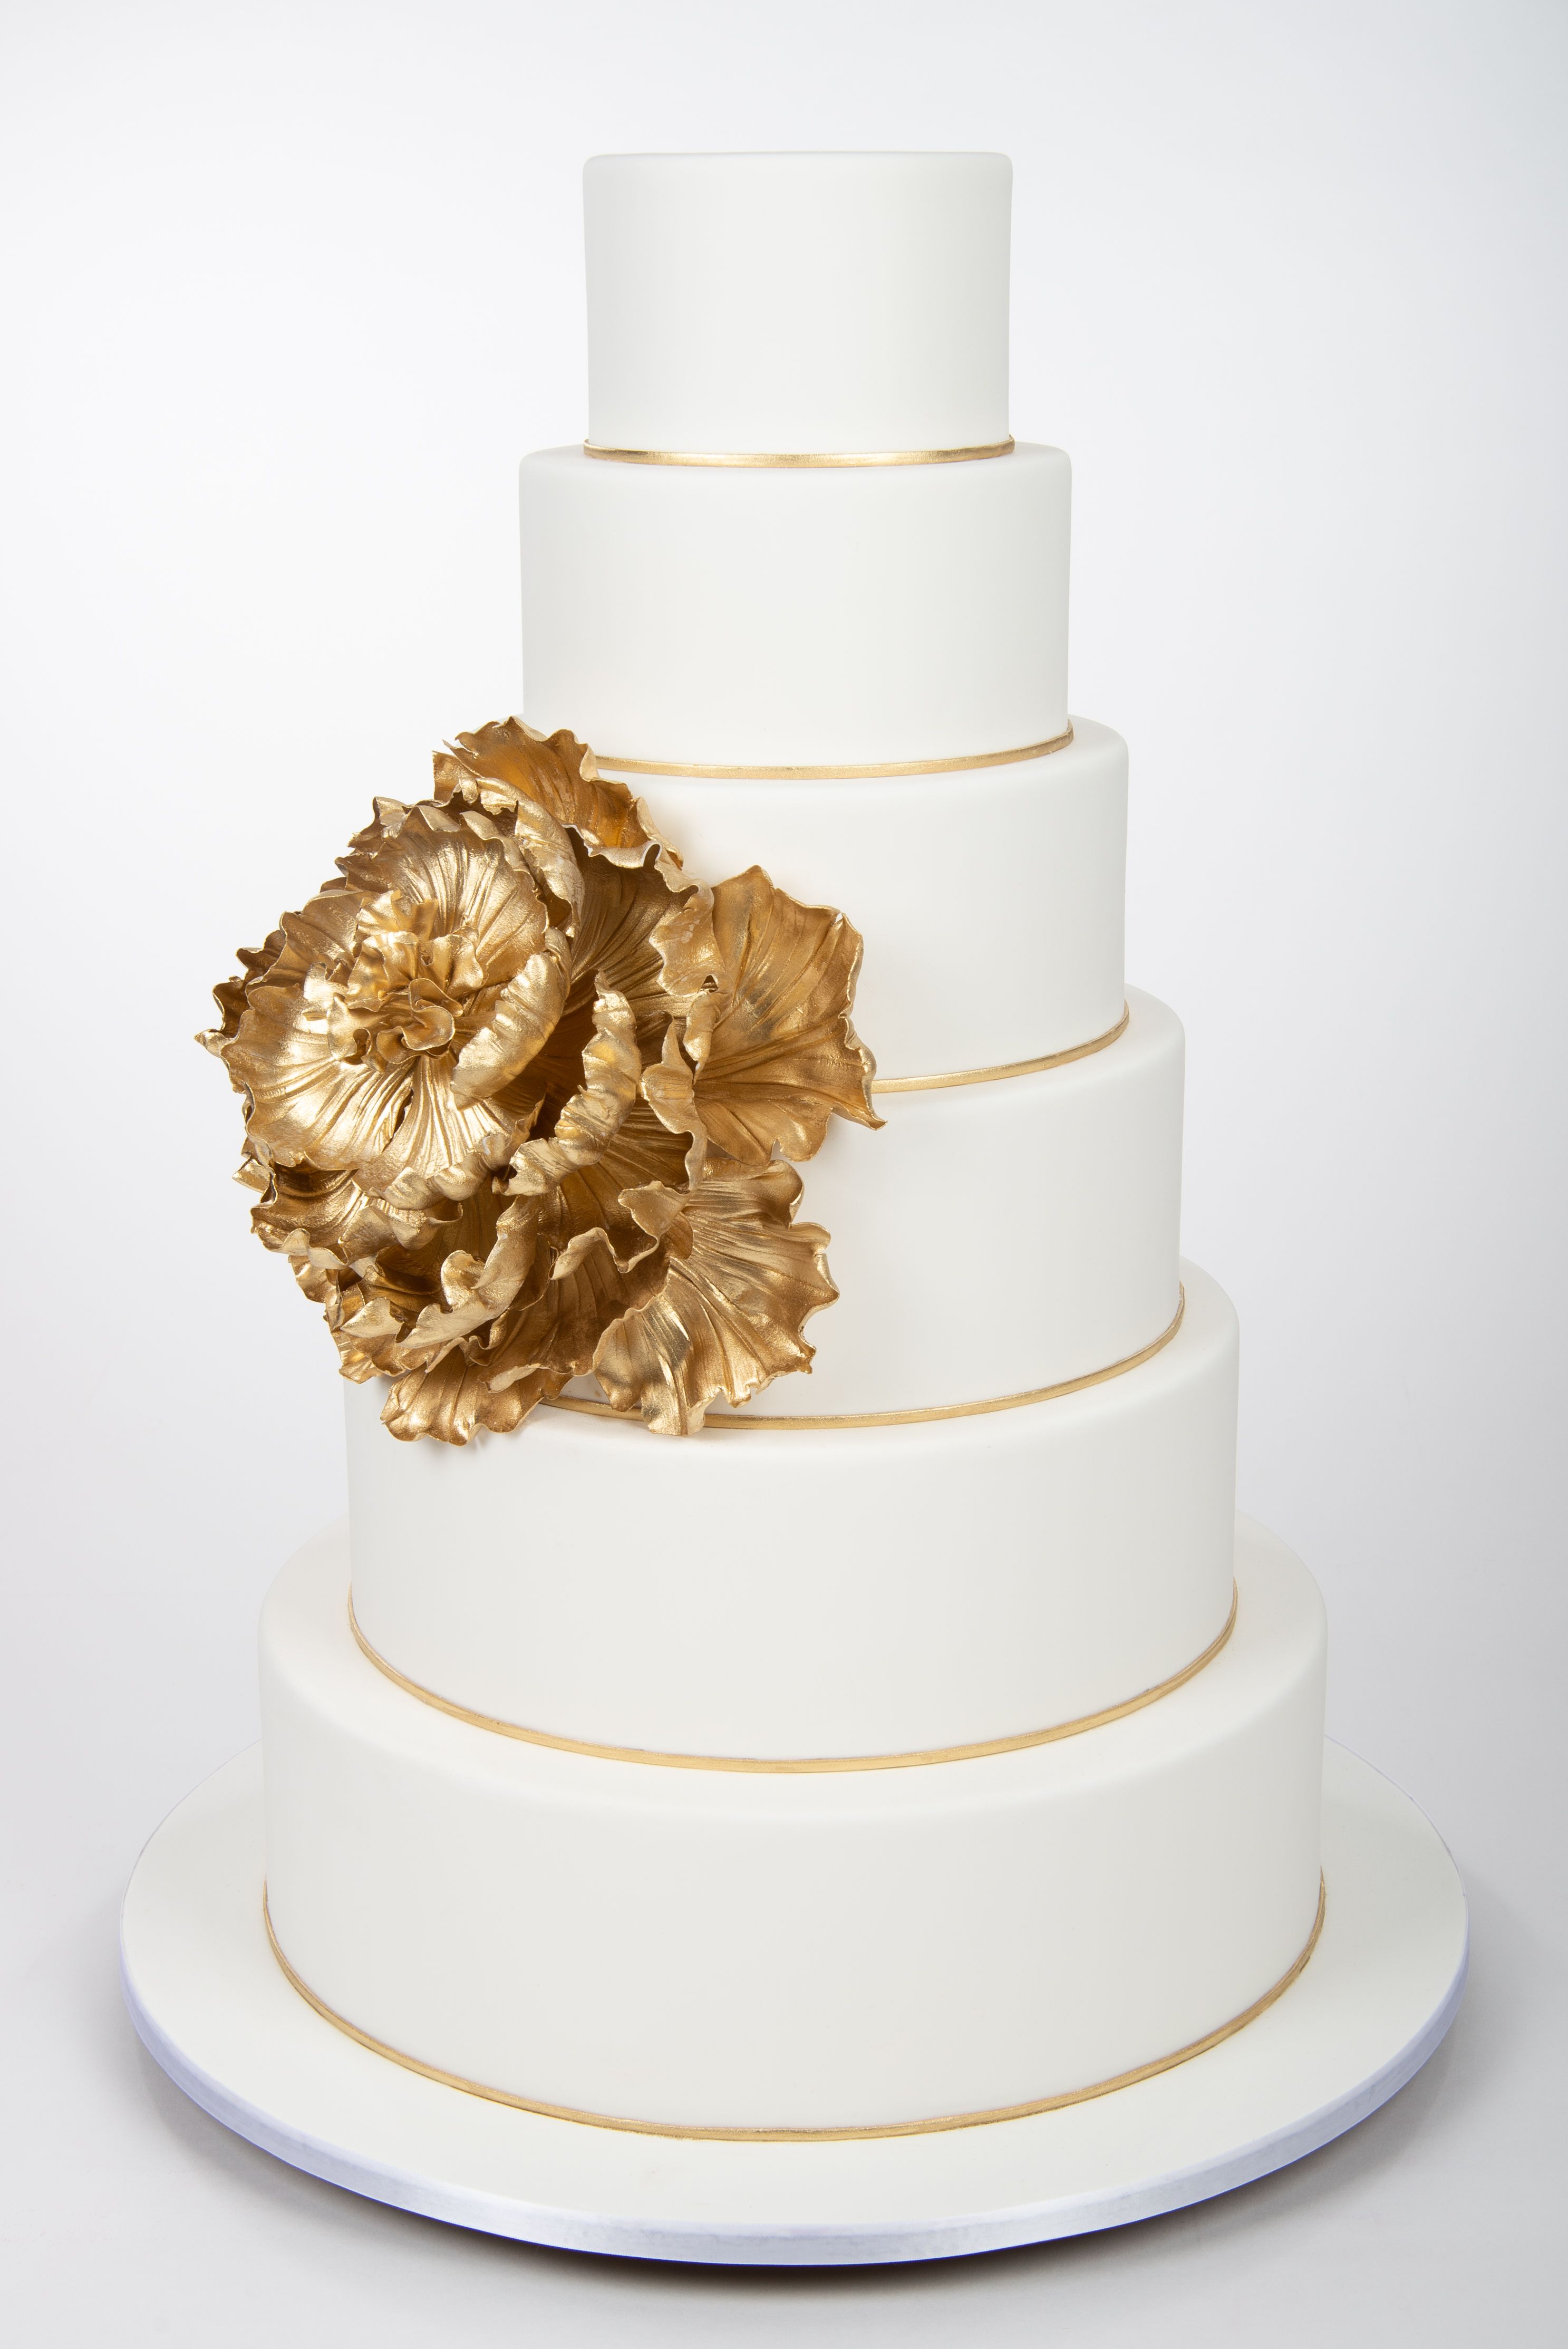 Buy Online Formal Wedding Cake - Budget Friendly | Harry Batten